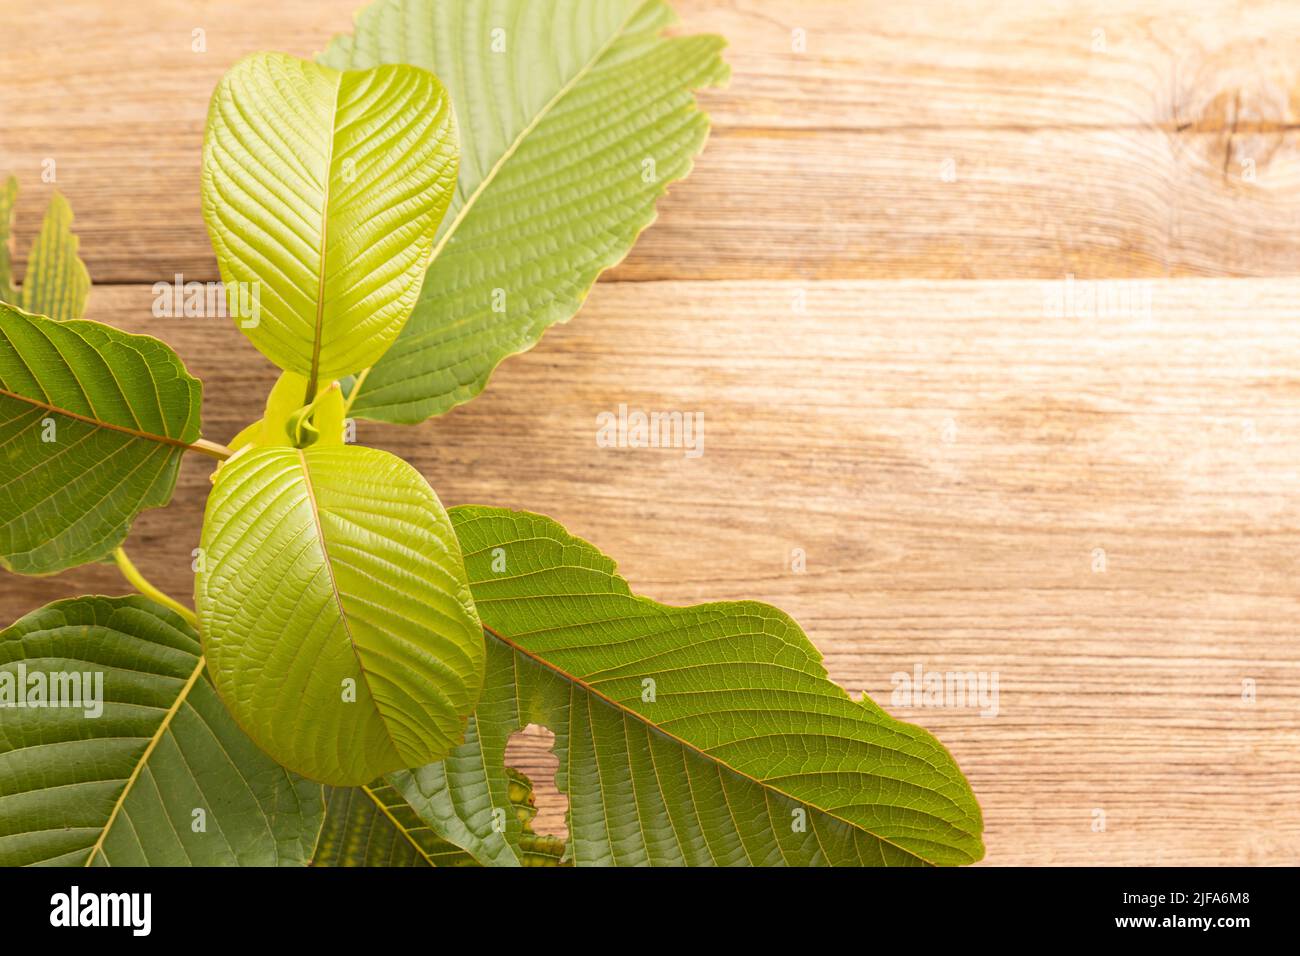 Fresh green Mitragyna speciosa leaf or kratom tree on wooden table background Stock Photo